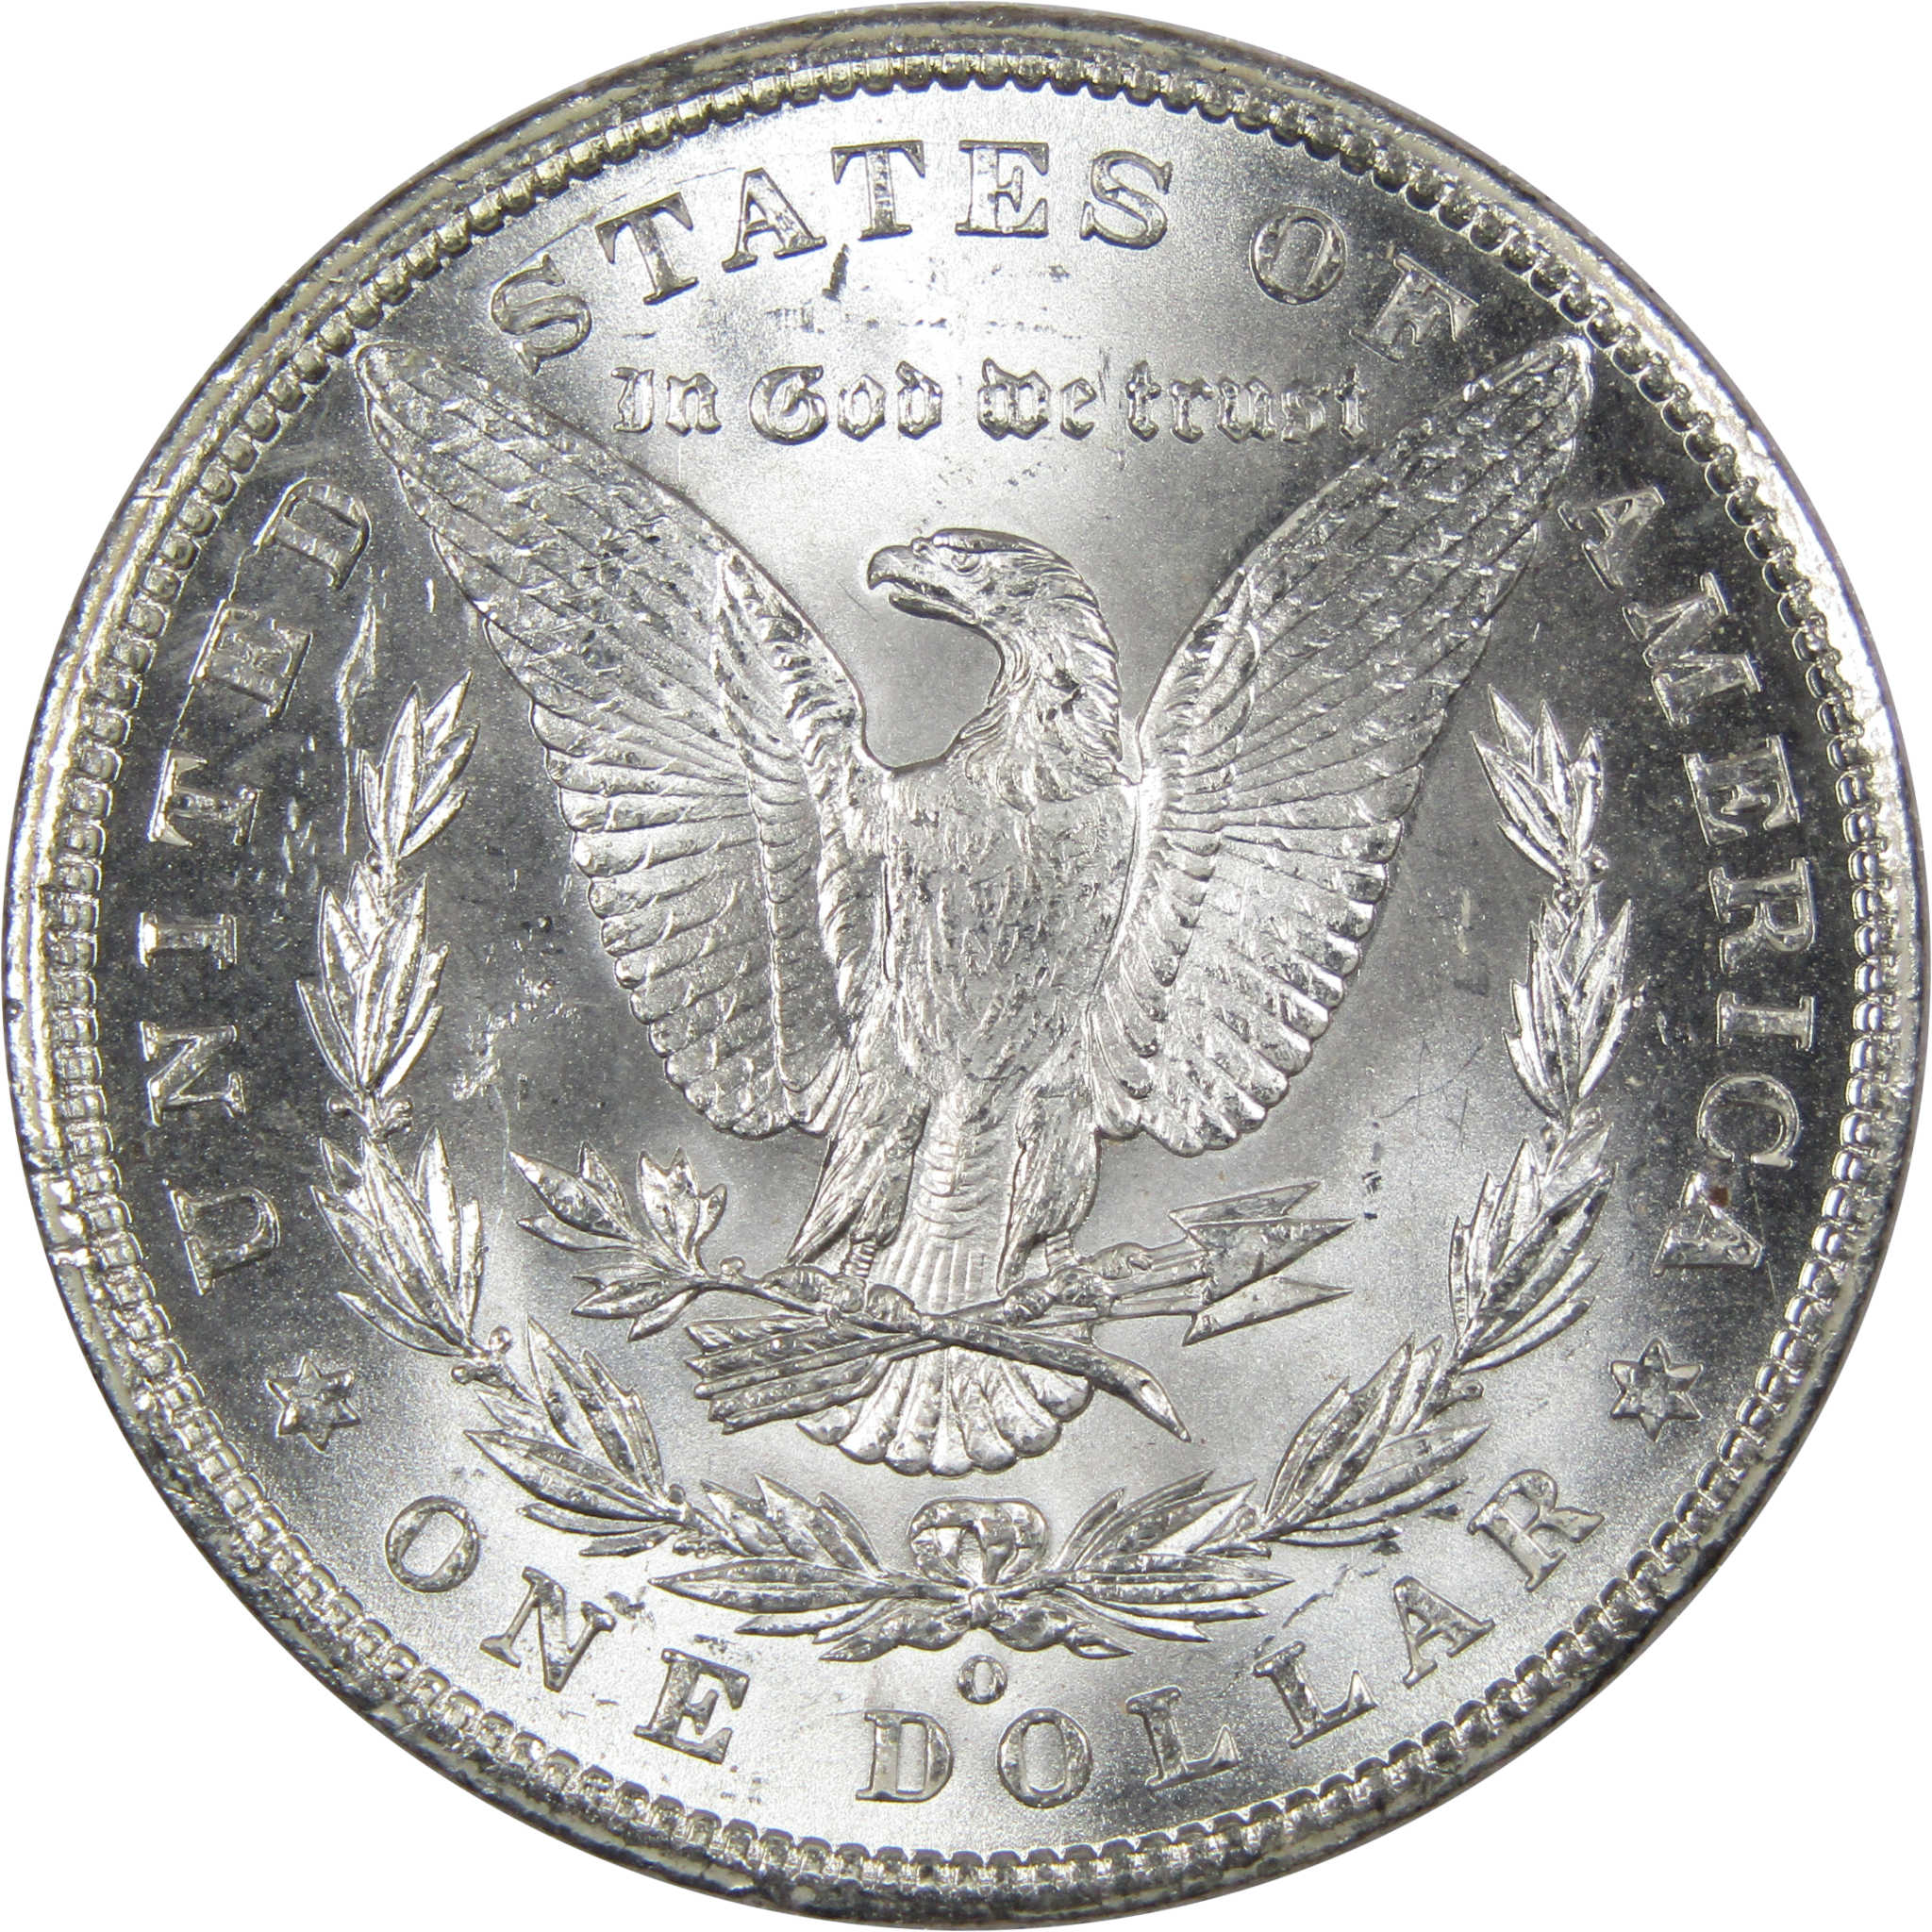 1900 O Morgan Dollar BU Uncirculated Mint State 90% Silver SKU:IPC9780 - Morgan coin - Morgan silver dollar - Morgan silver dollar for sale - Profile Coins &amp; Collectibles